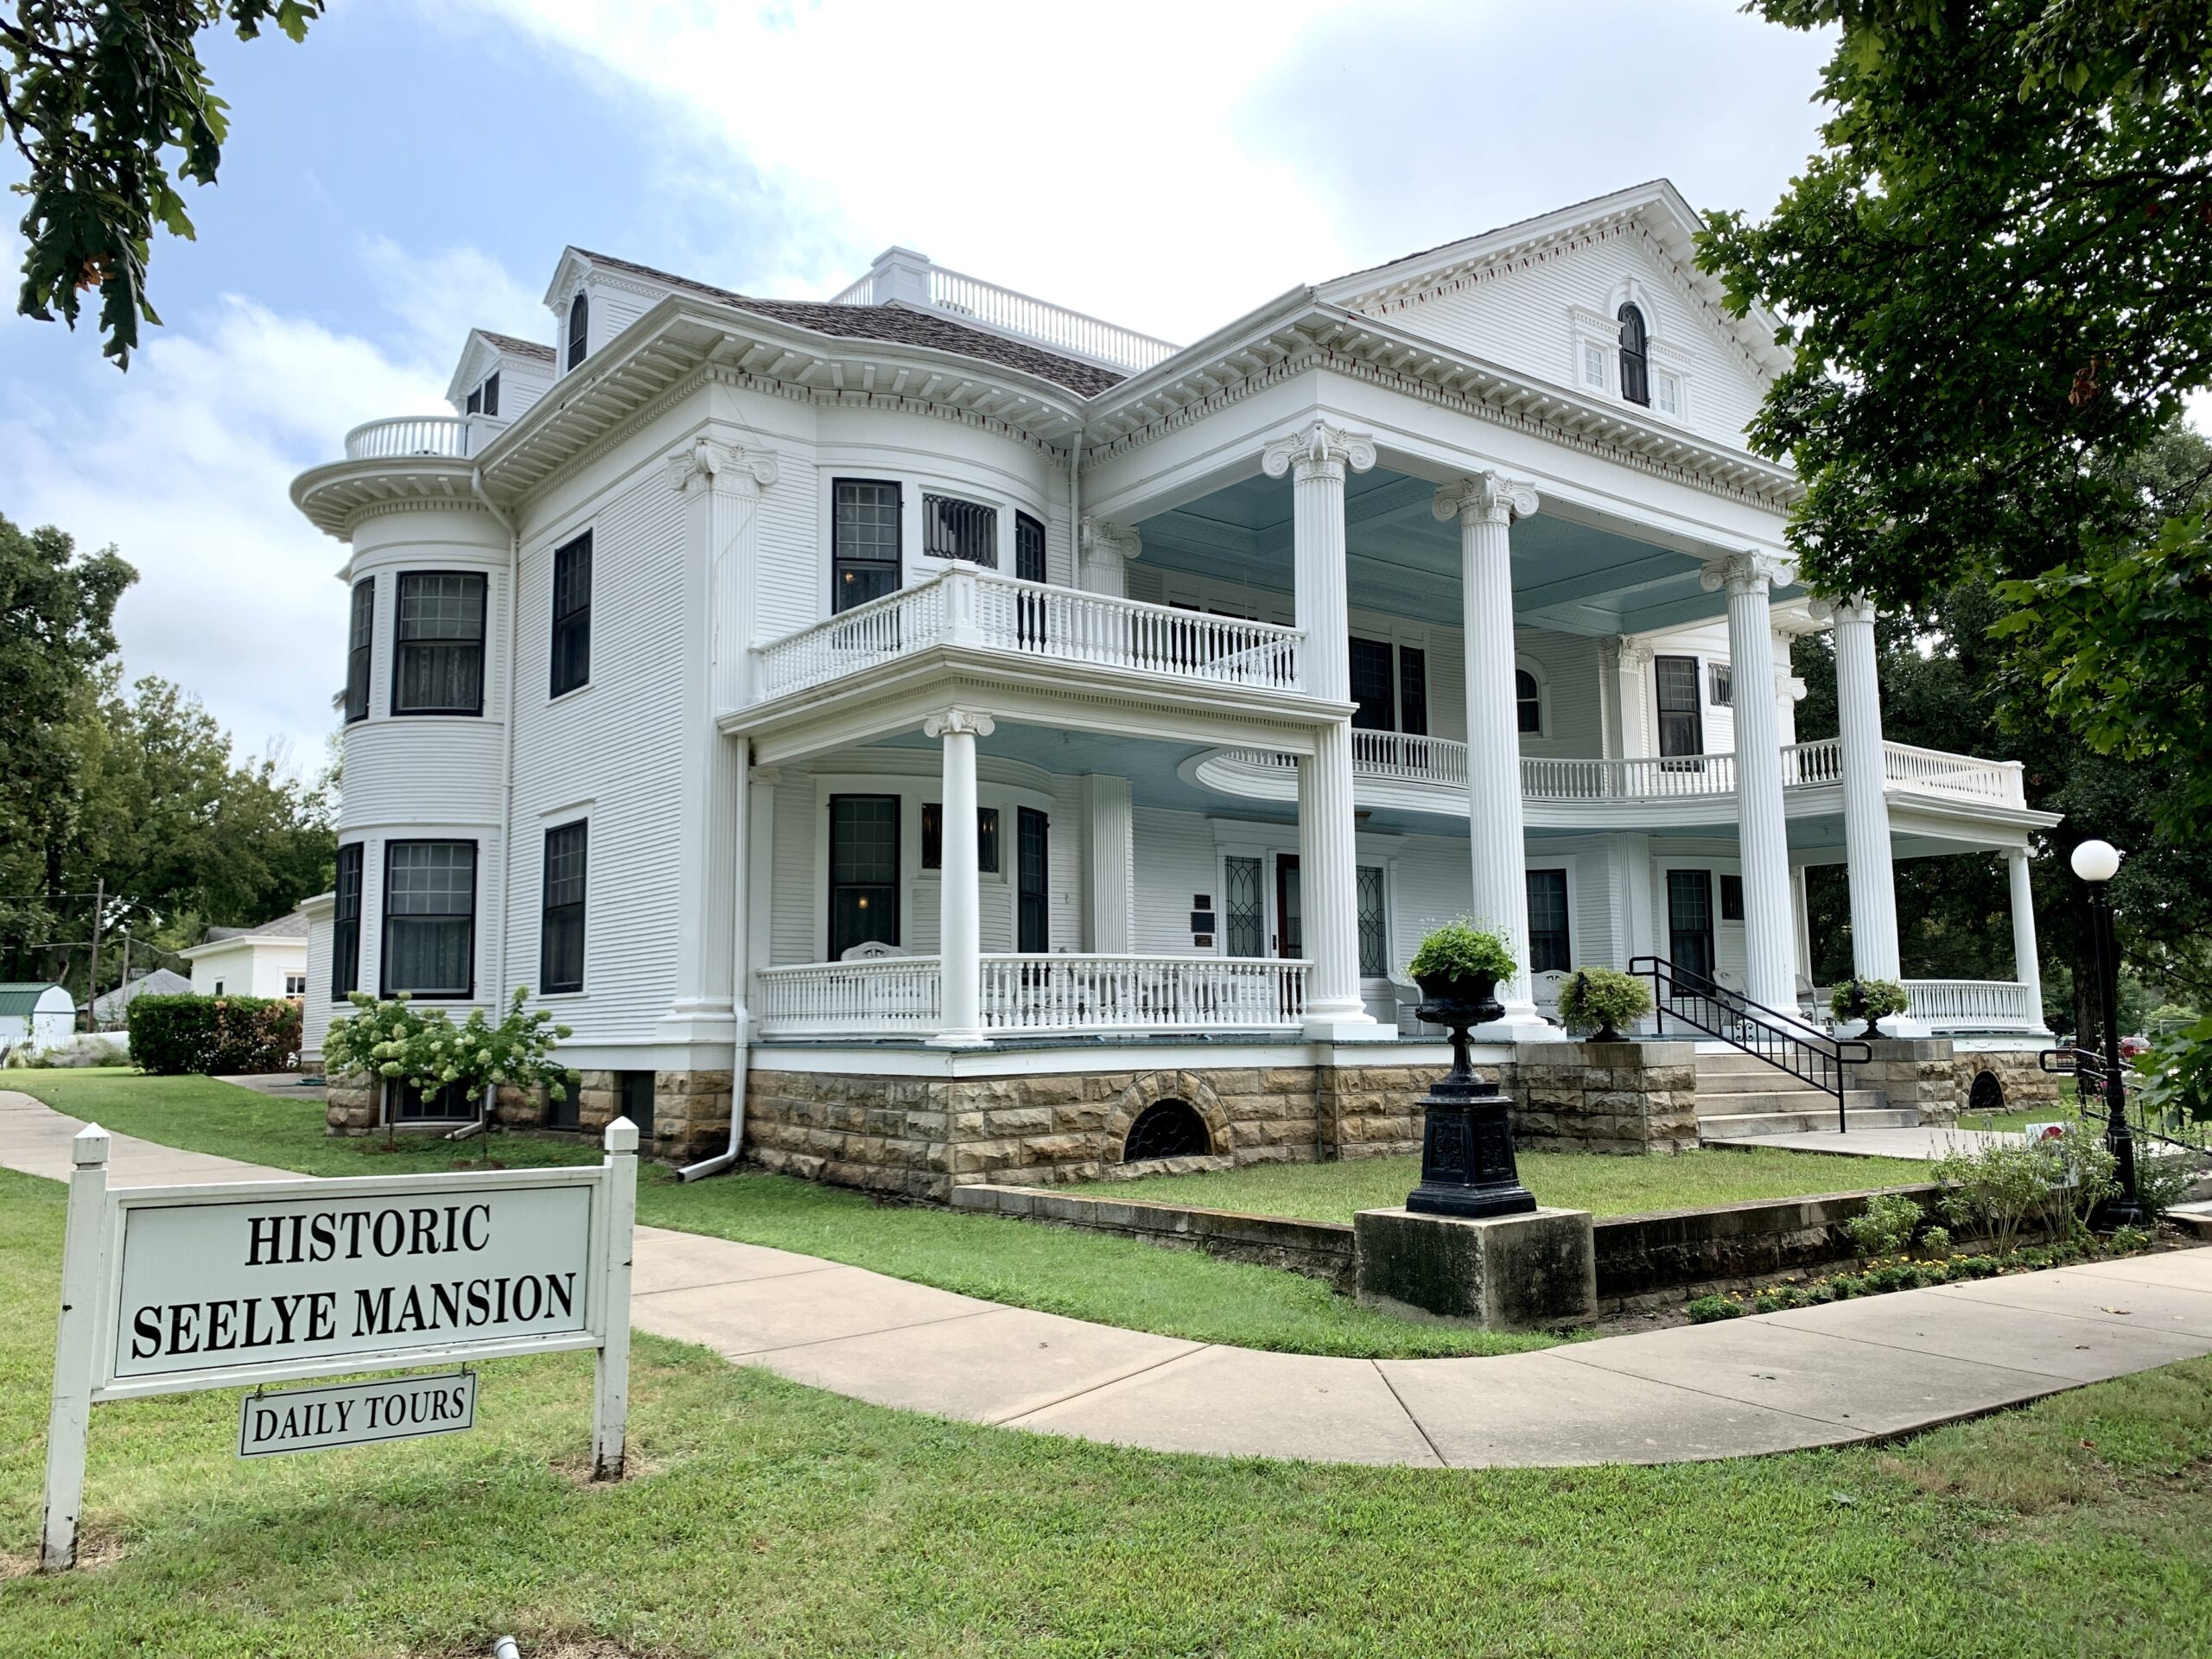 Historic Seelye Mansion